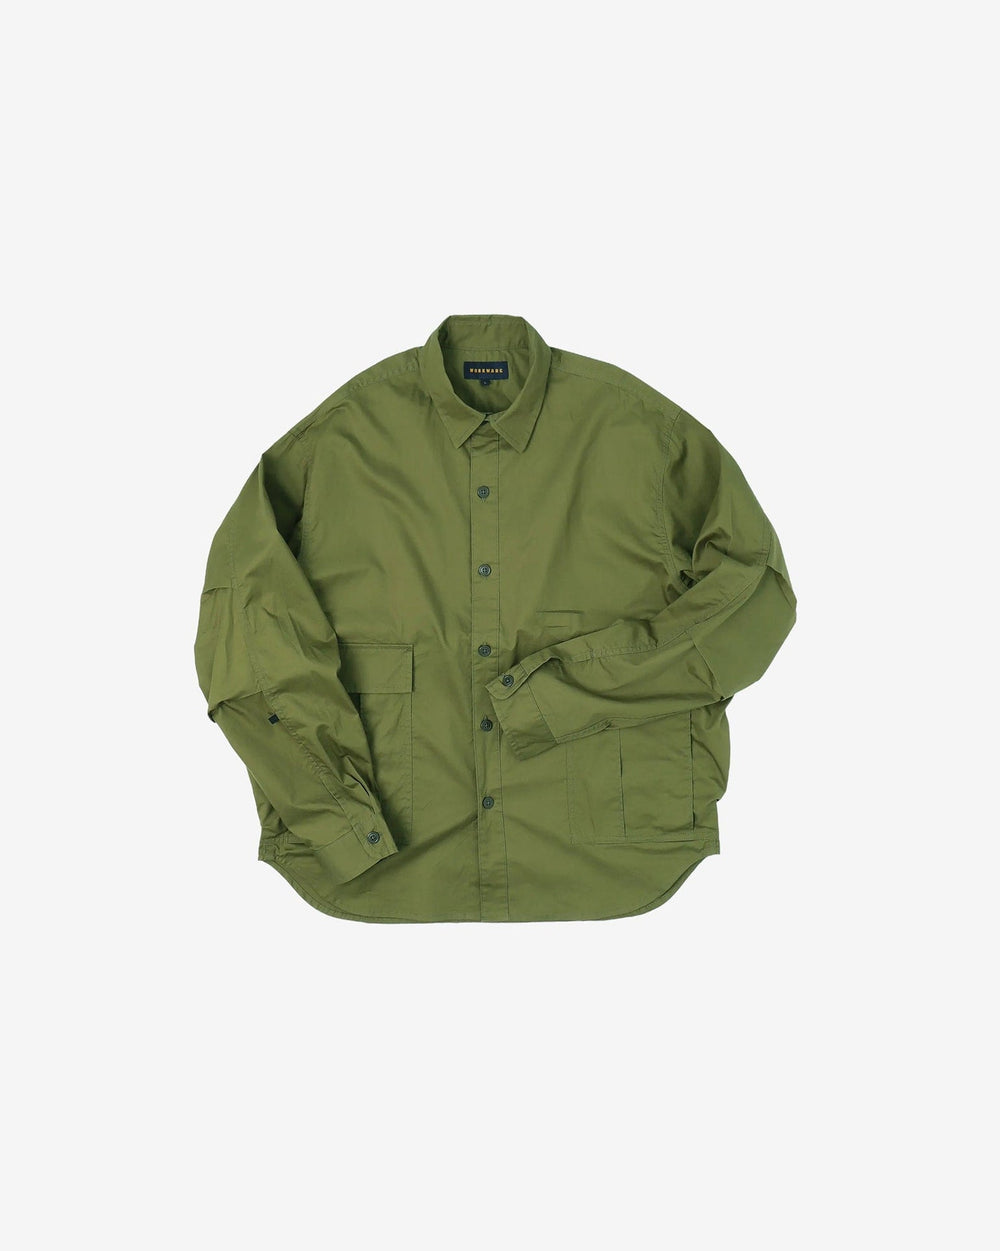 Workware - M51 Shirt #600 - Green